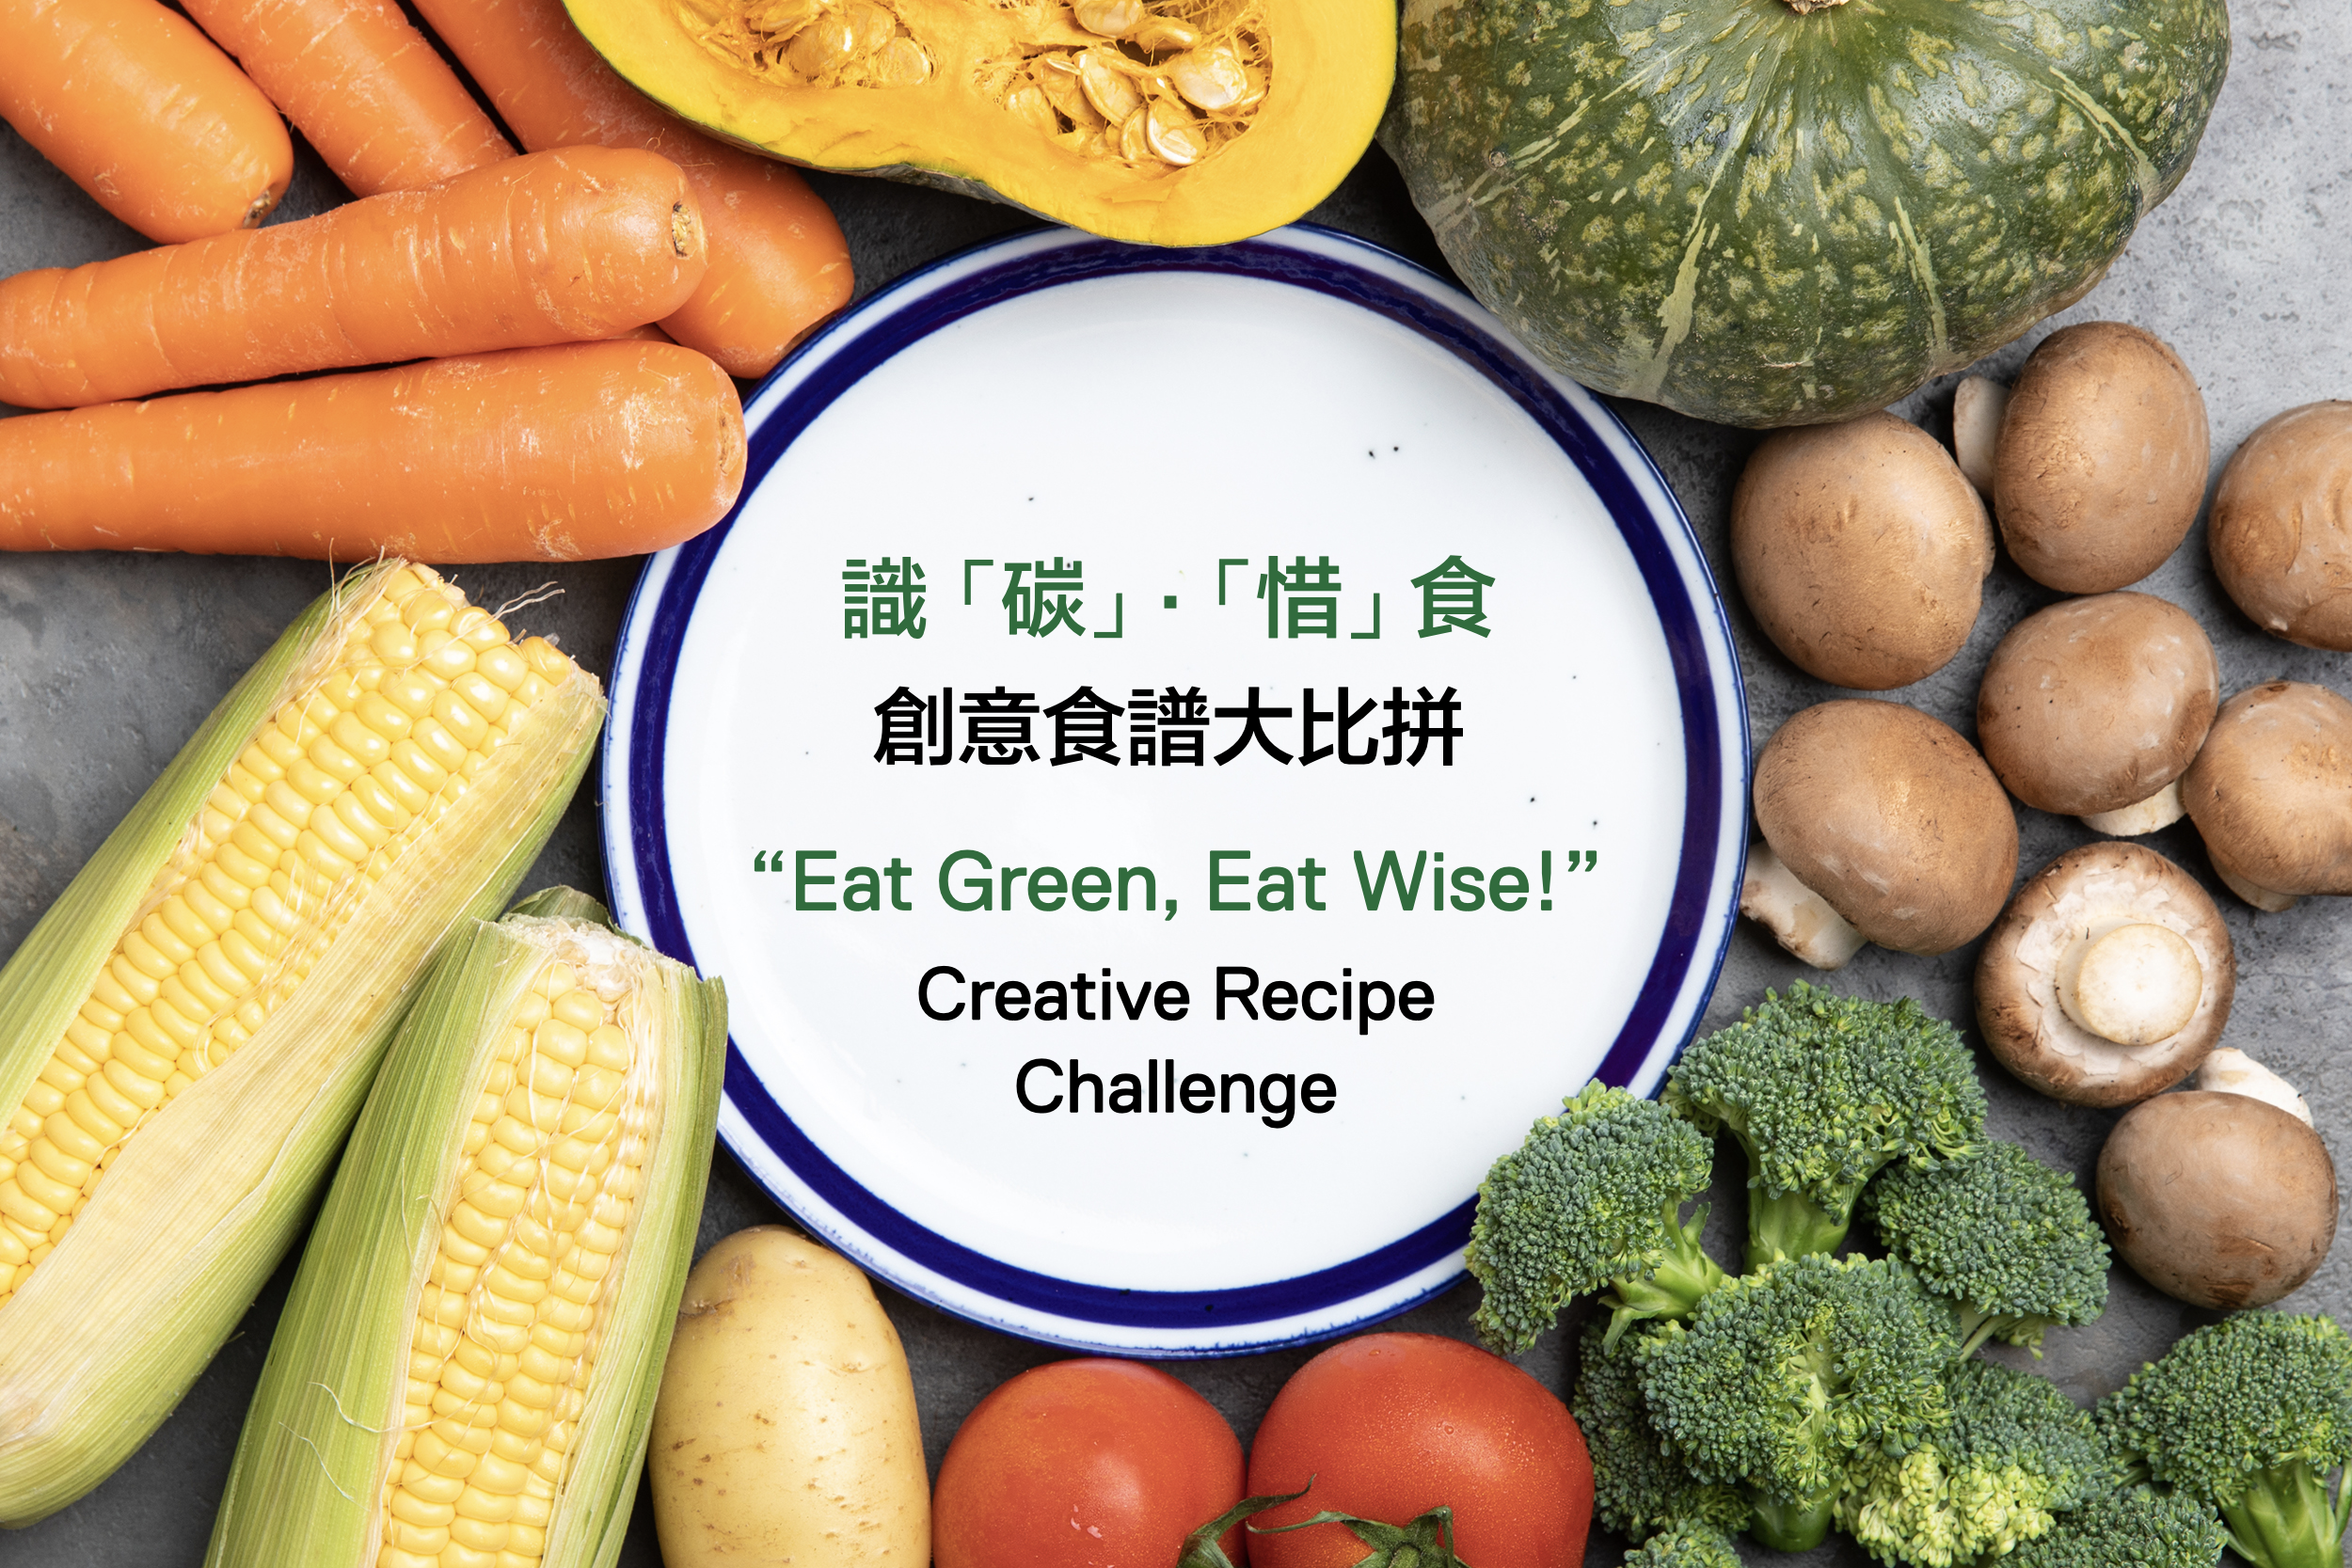 “Eat Green, Eat Wise!” Creative Recipe Challenge